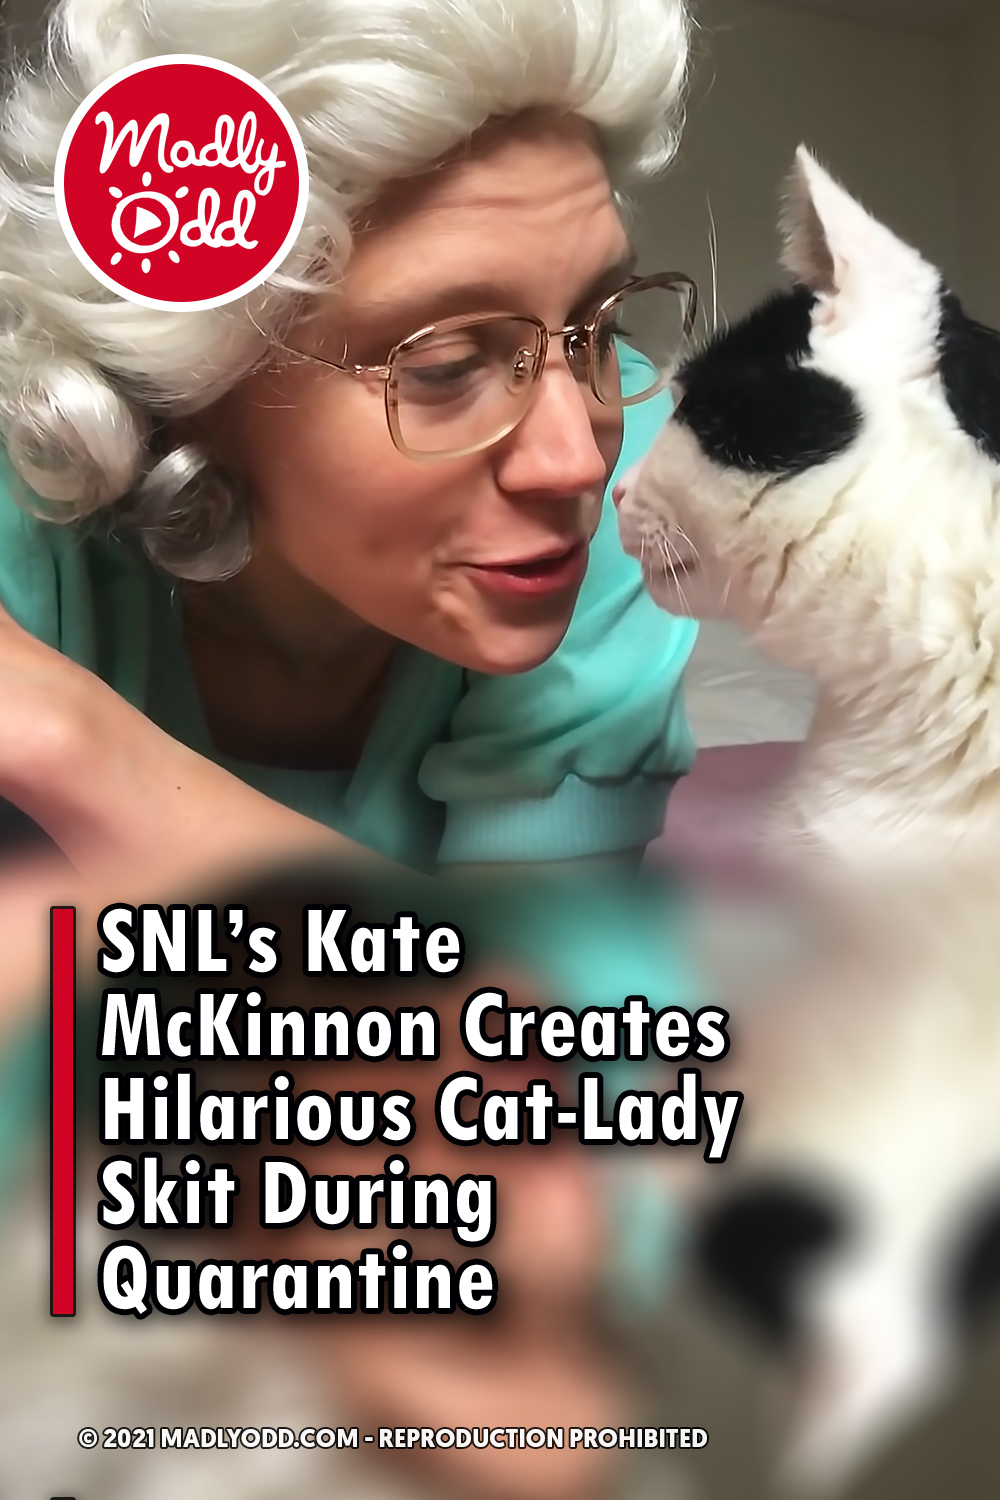 SNL’s Kate McKinnon Creates Hilarious Cat-Lady Skit During Quarantine